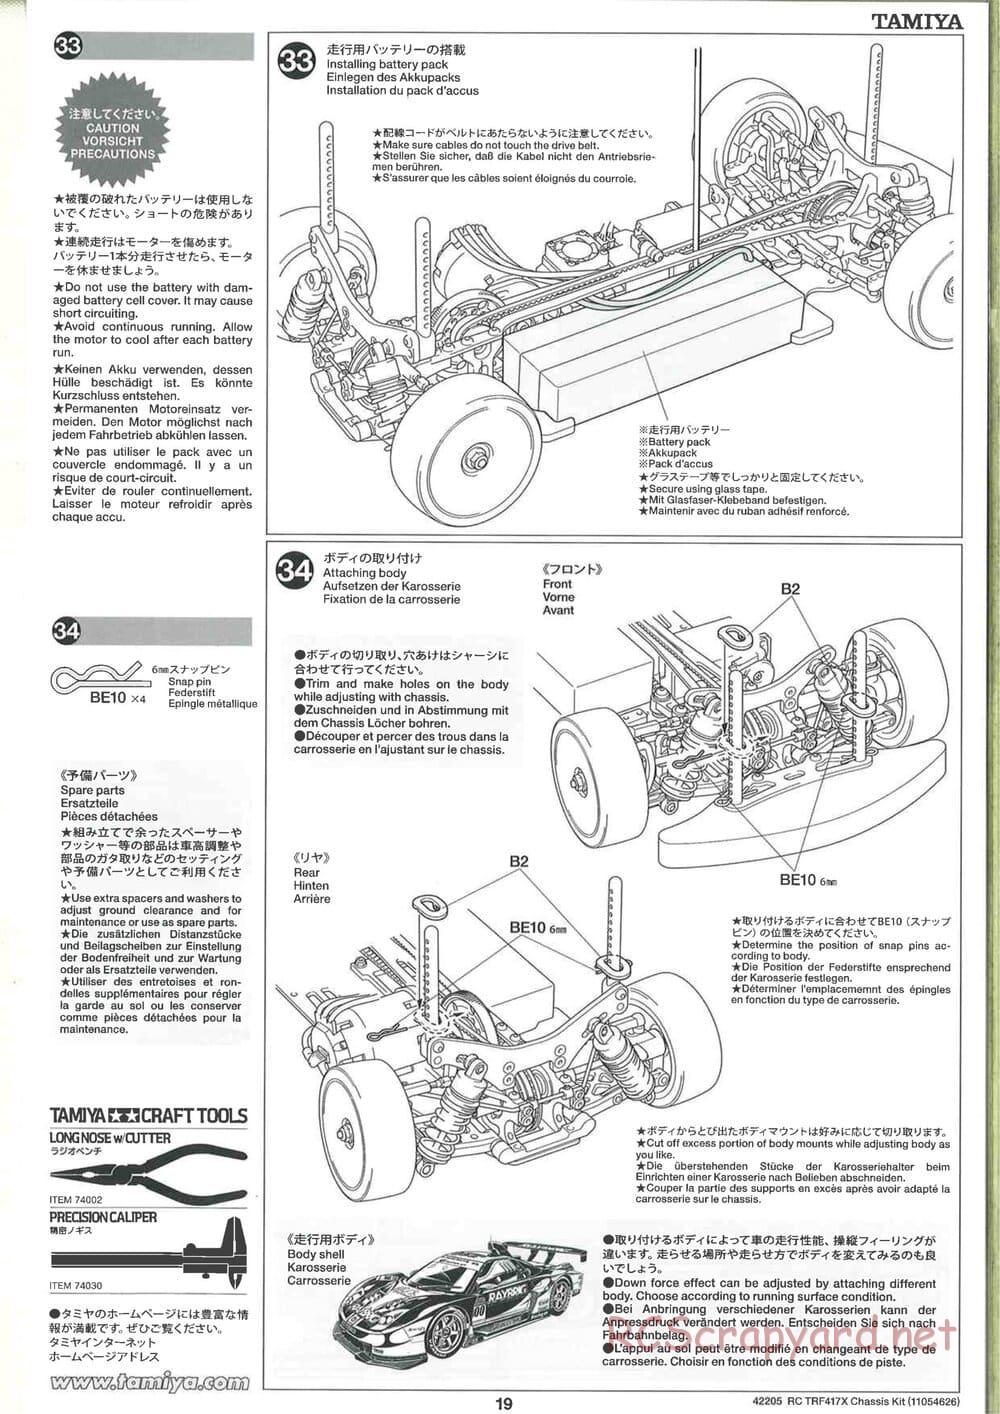 Tamiya - TRF417X Chassis - Manual - Page 19